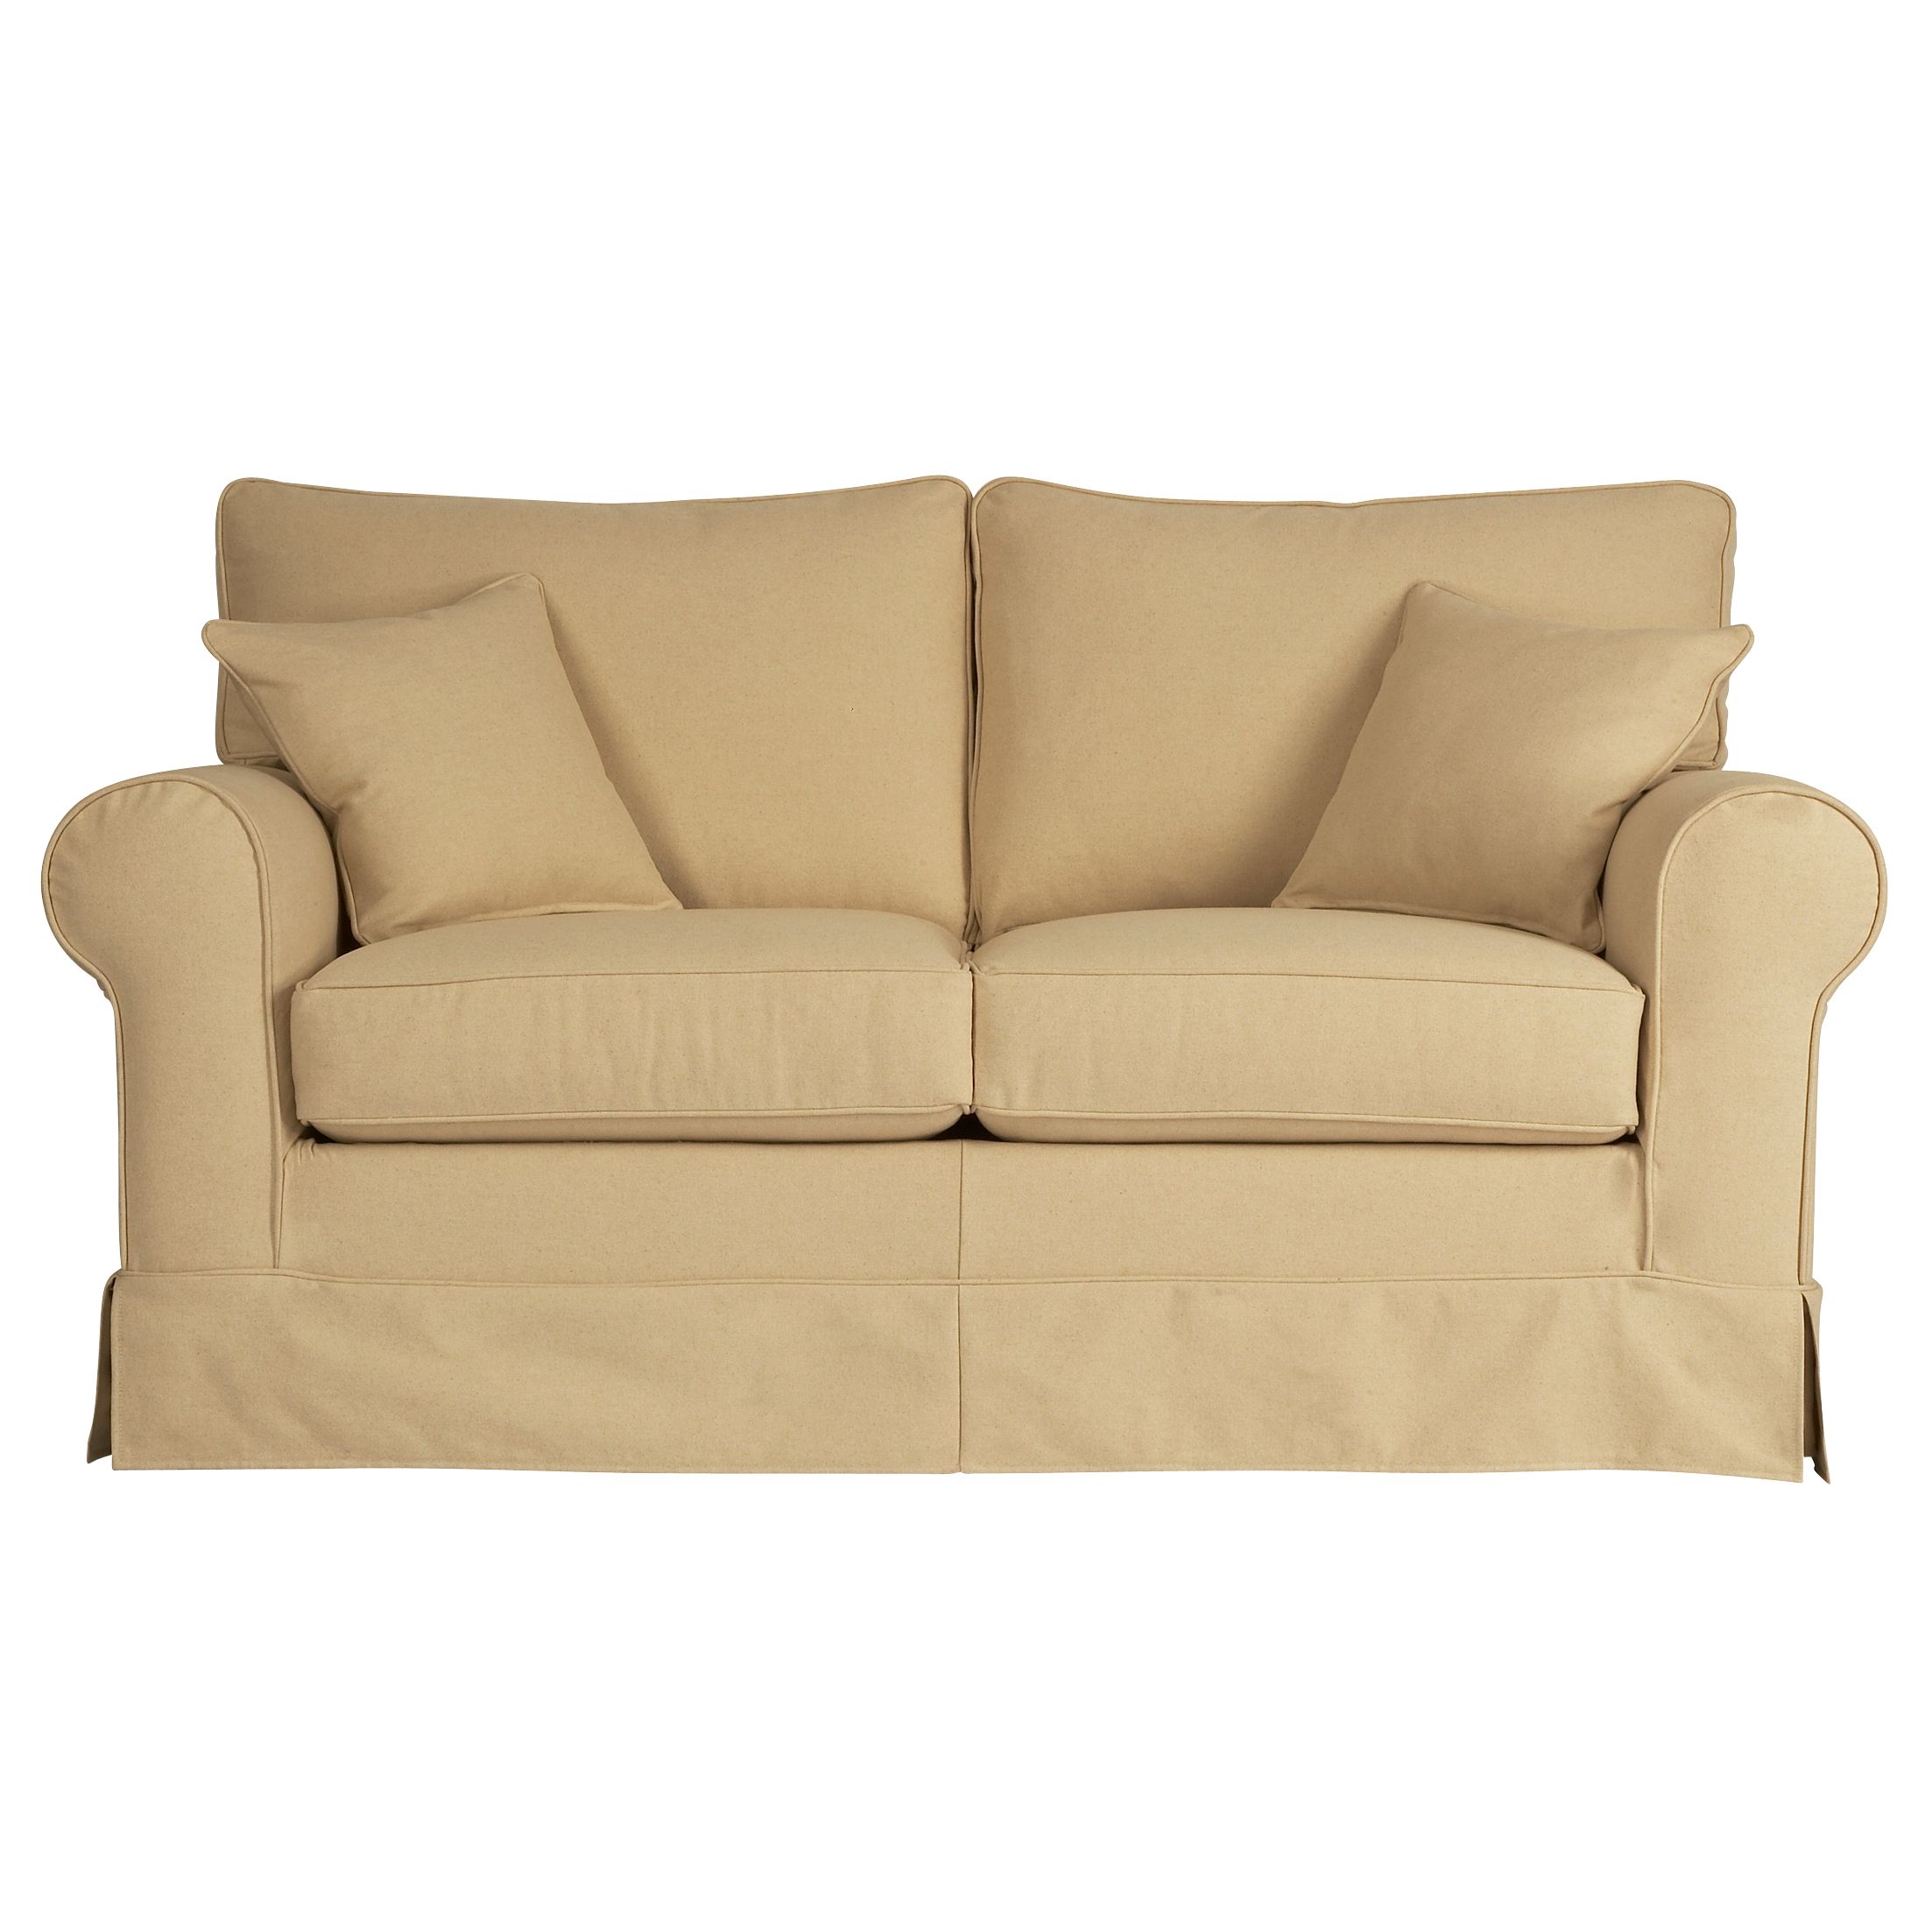 John Lewis Padstow Medium Sofa Bed, Cream, width 180cm